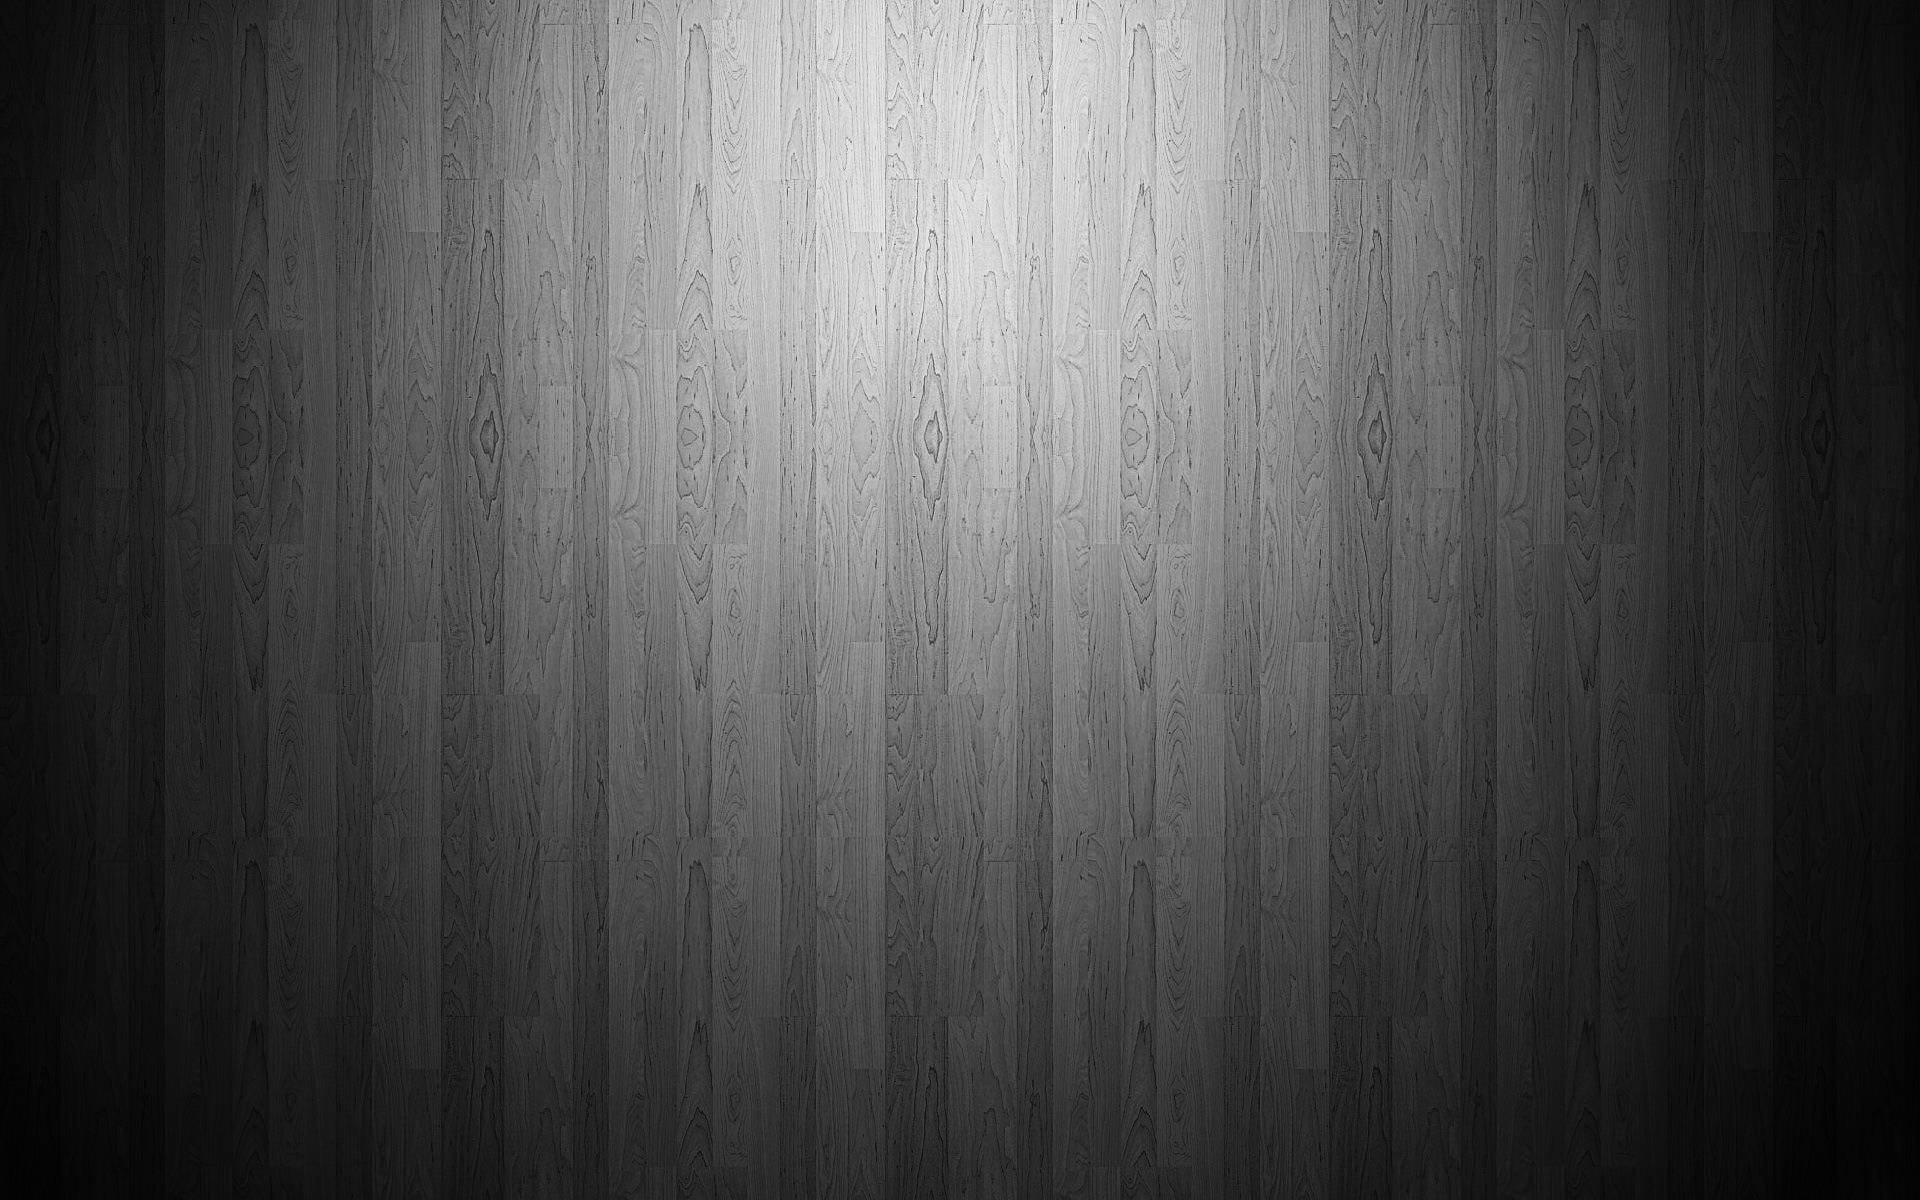 Monochrome Hd Wood Background